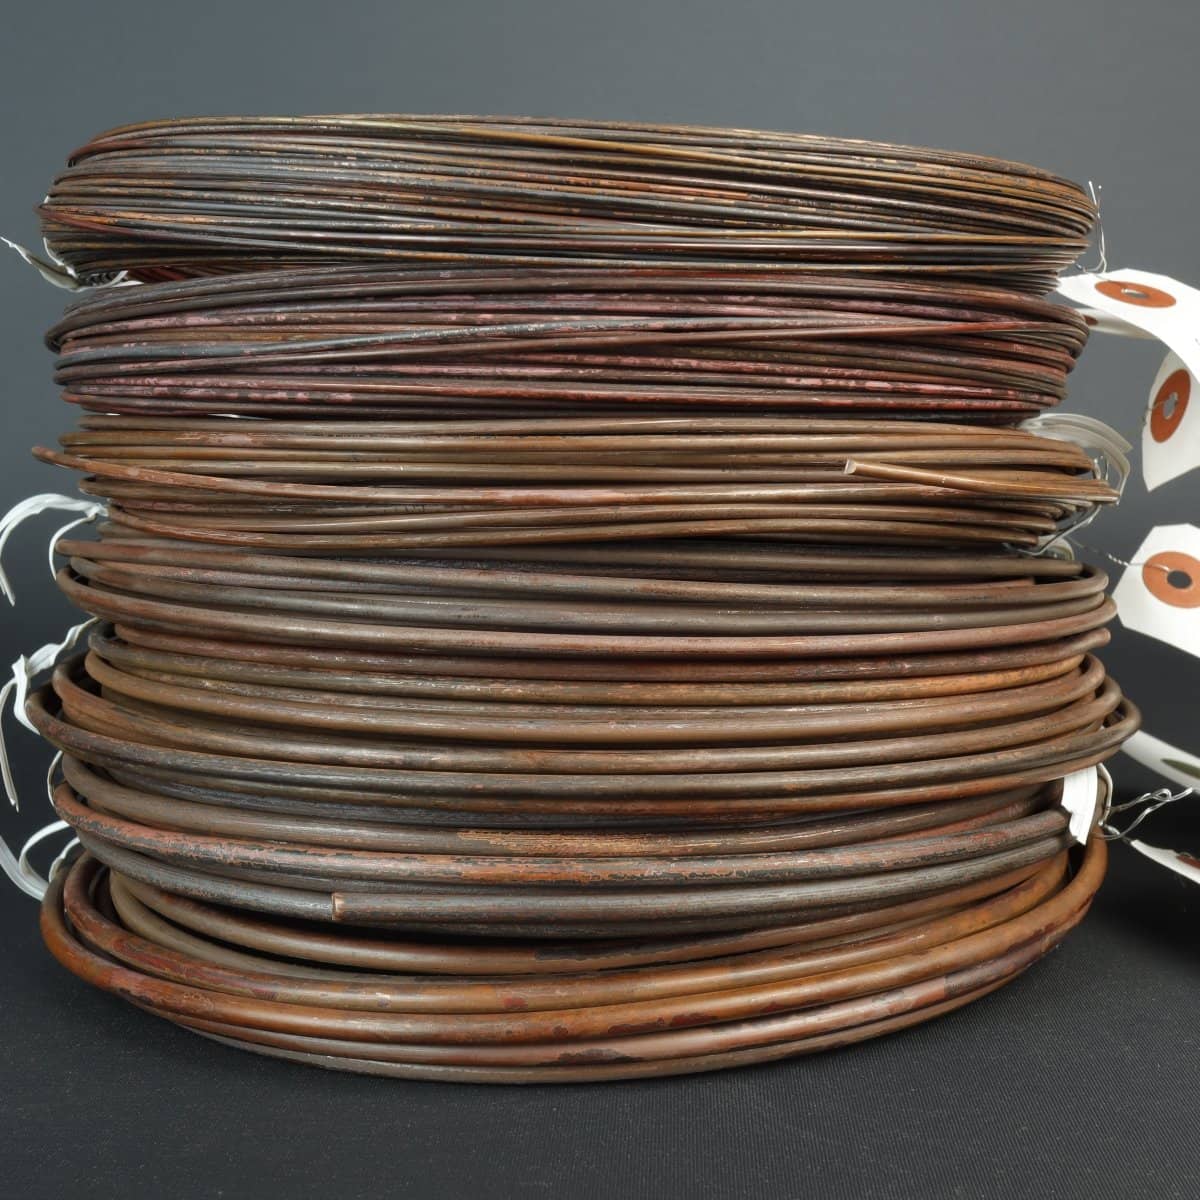 #14 Gauge Copper Bonsai Wire 500g - Bonsai-En